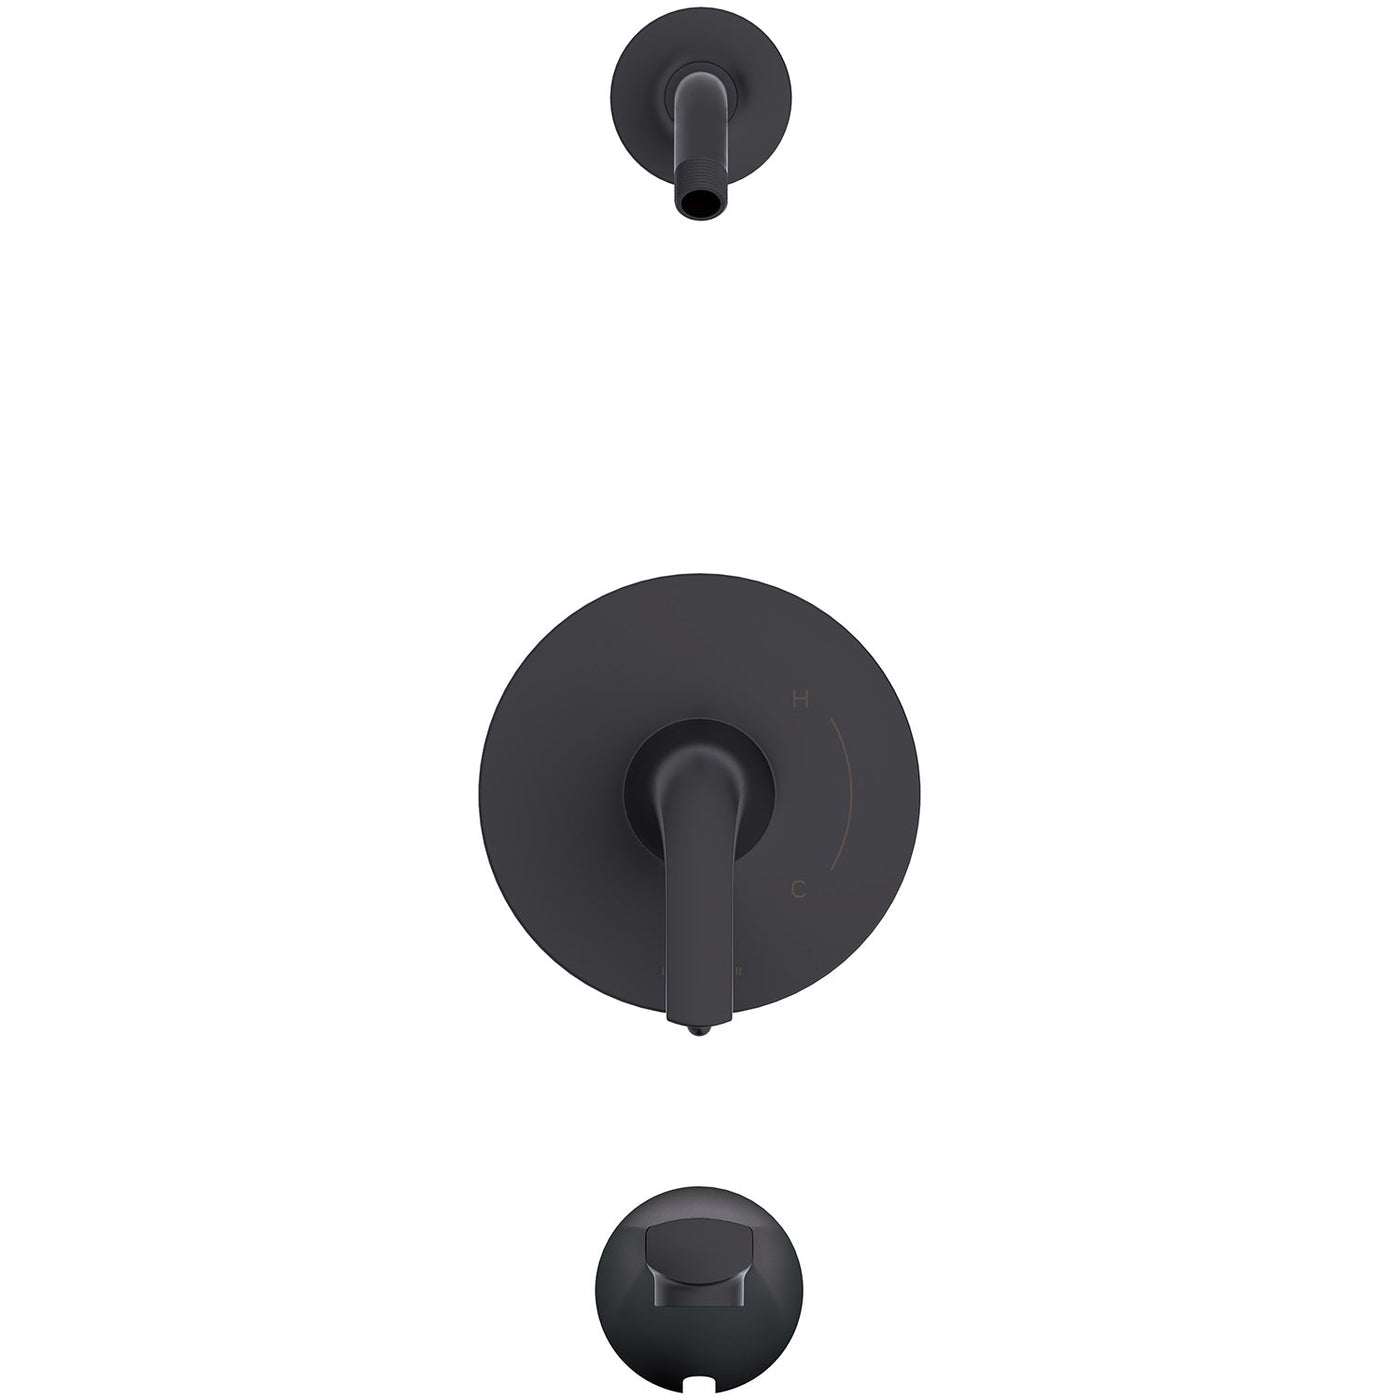 Lemora 1H Tub & Shower Trim Kit & Treysta Cartridge with Diverter on Valve Less Showerhead Satin Black